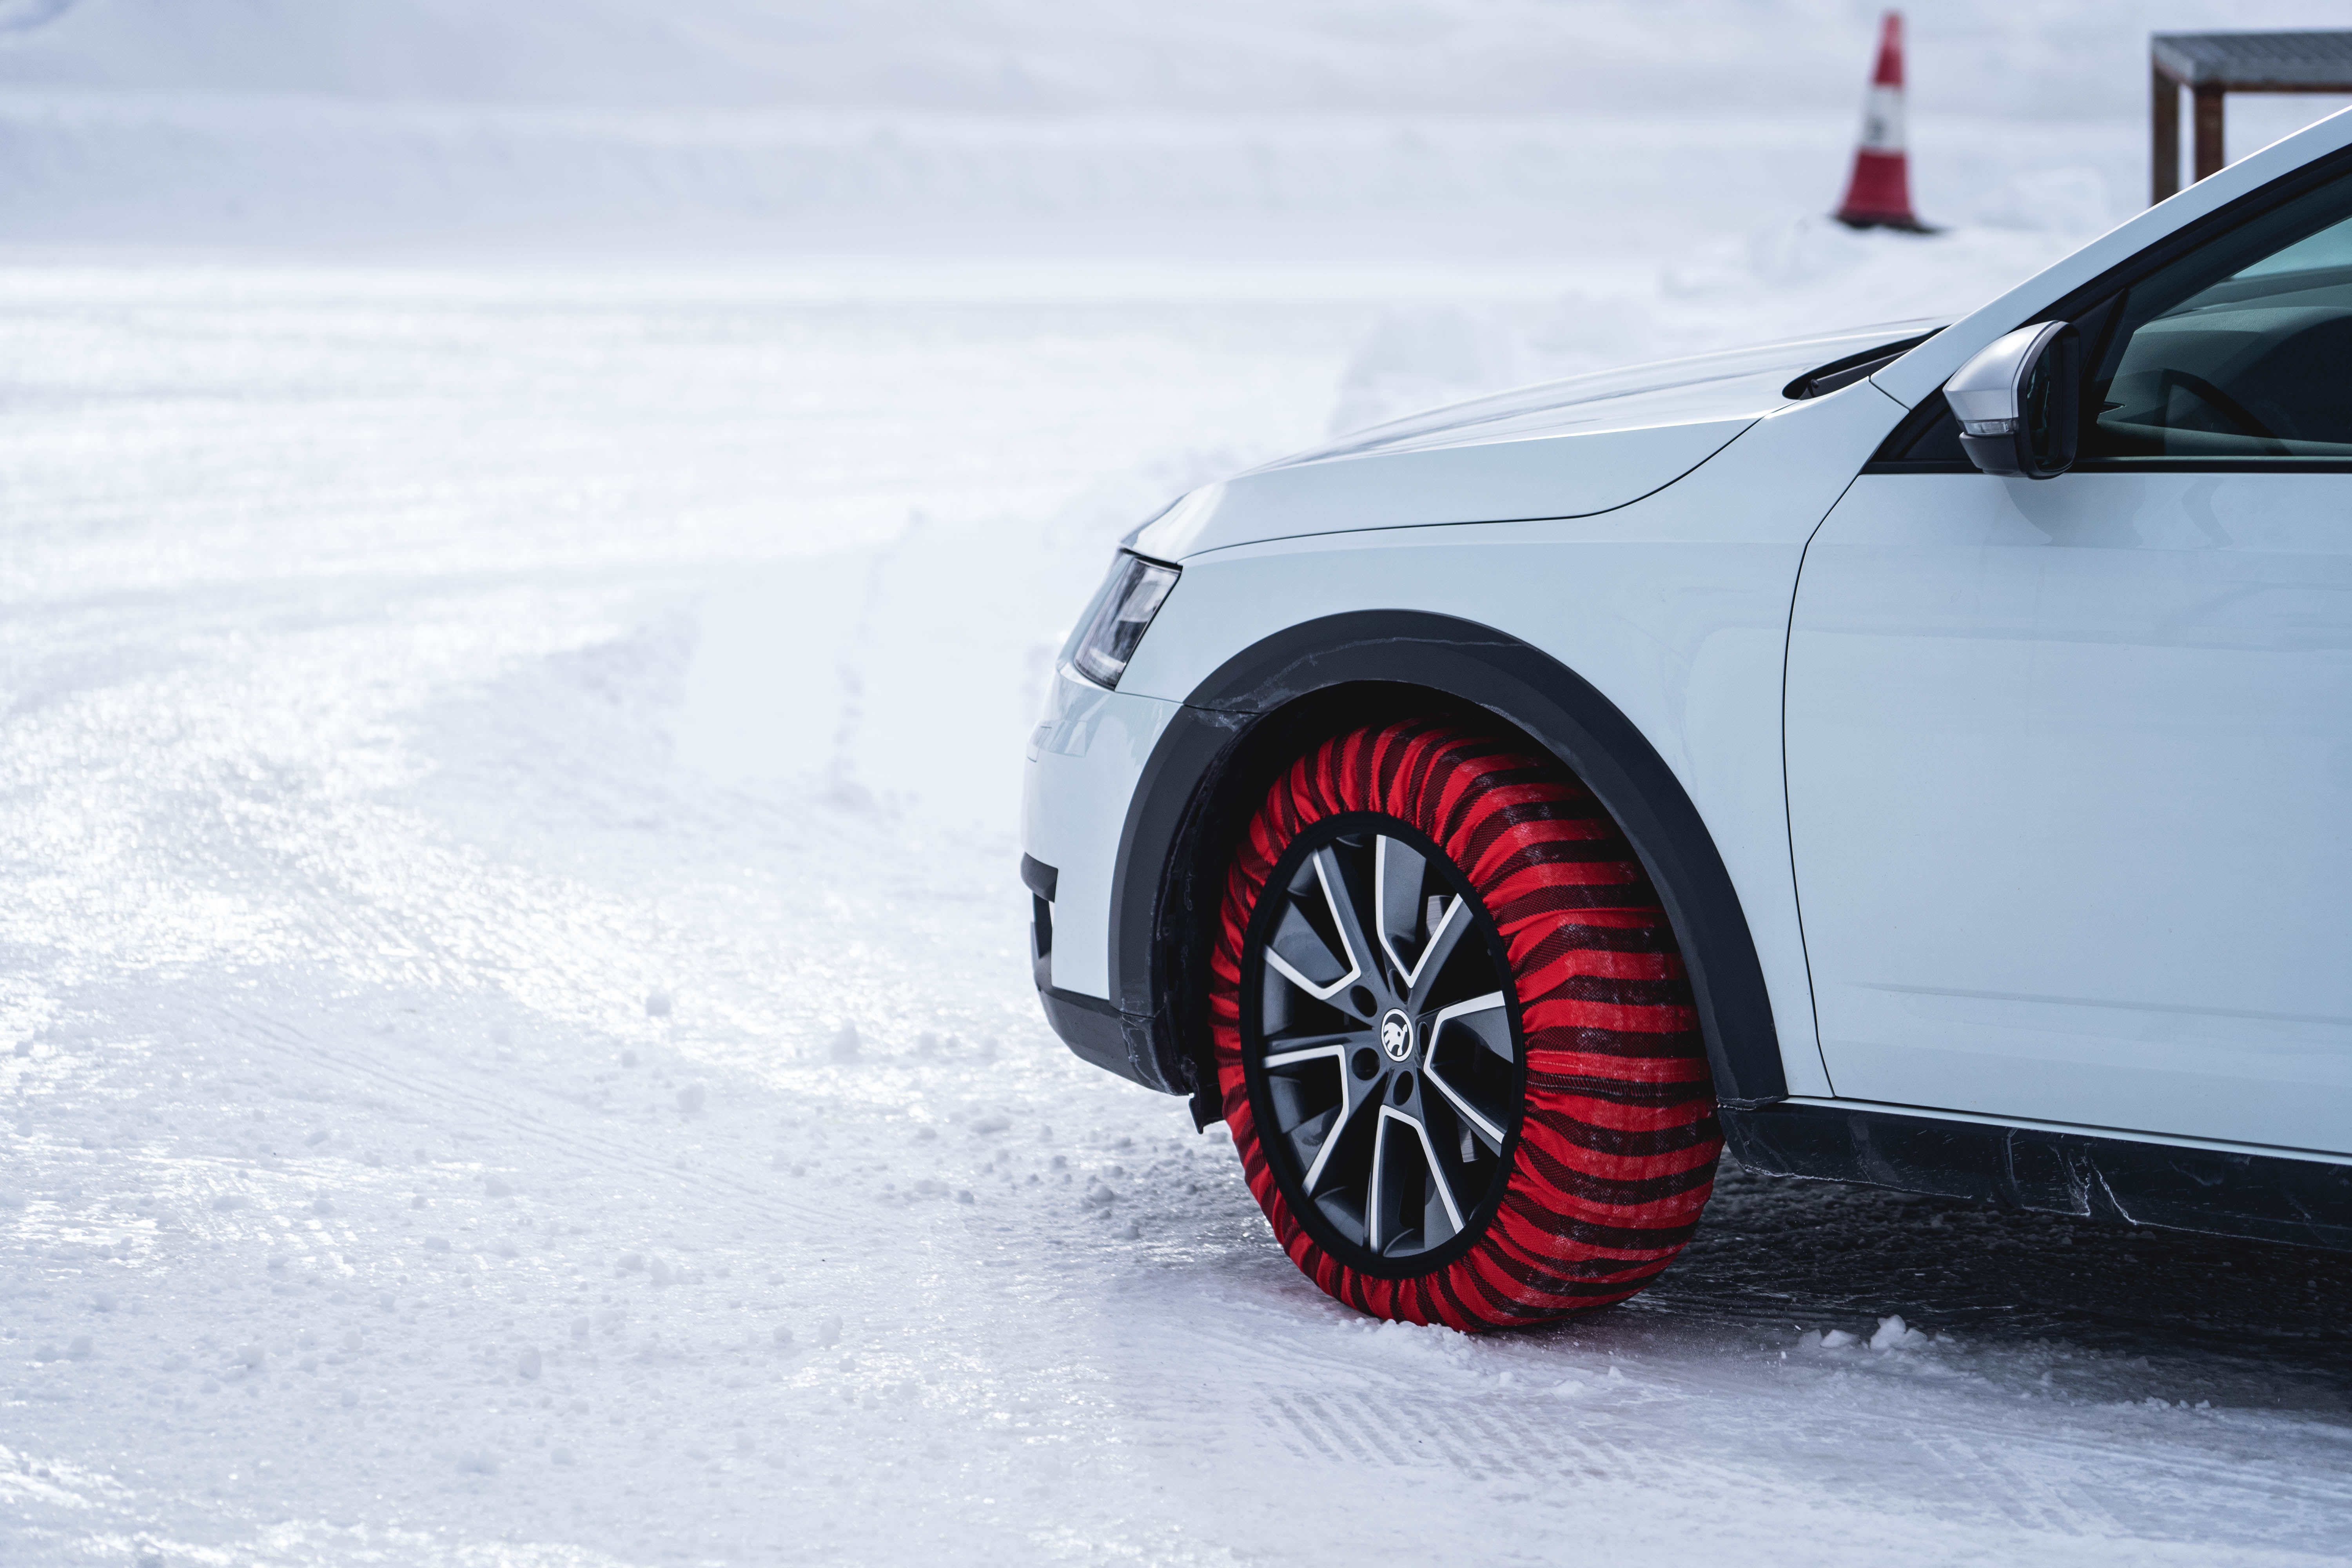 File:Snow socks for cars.jpg - Wikipedia